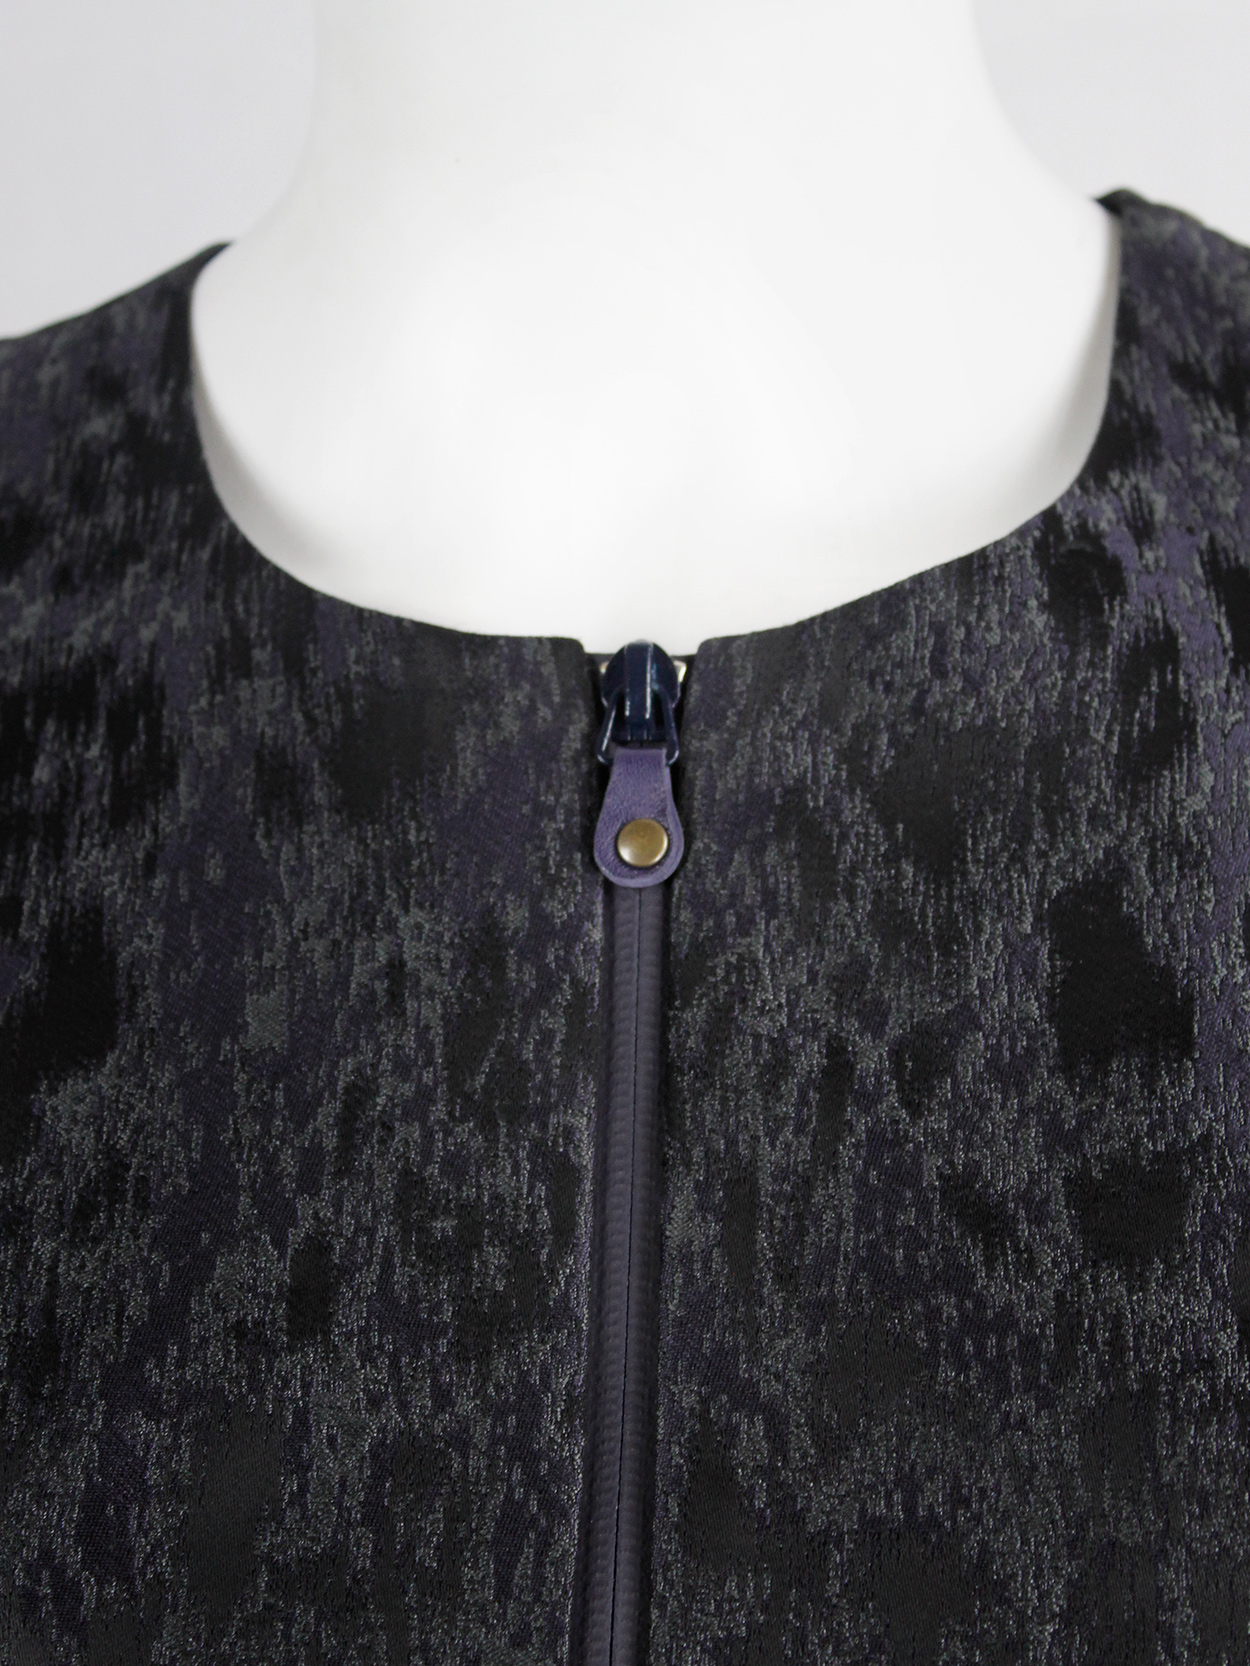 af Vandevorst purple brocade top and trousers with bronze studs runway spring 2014 (5)